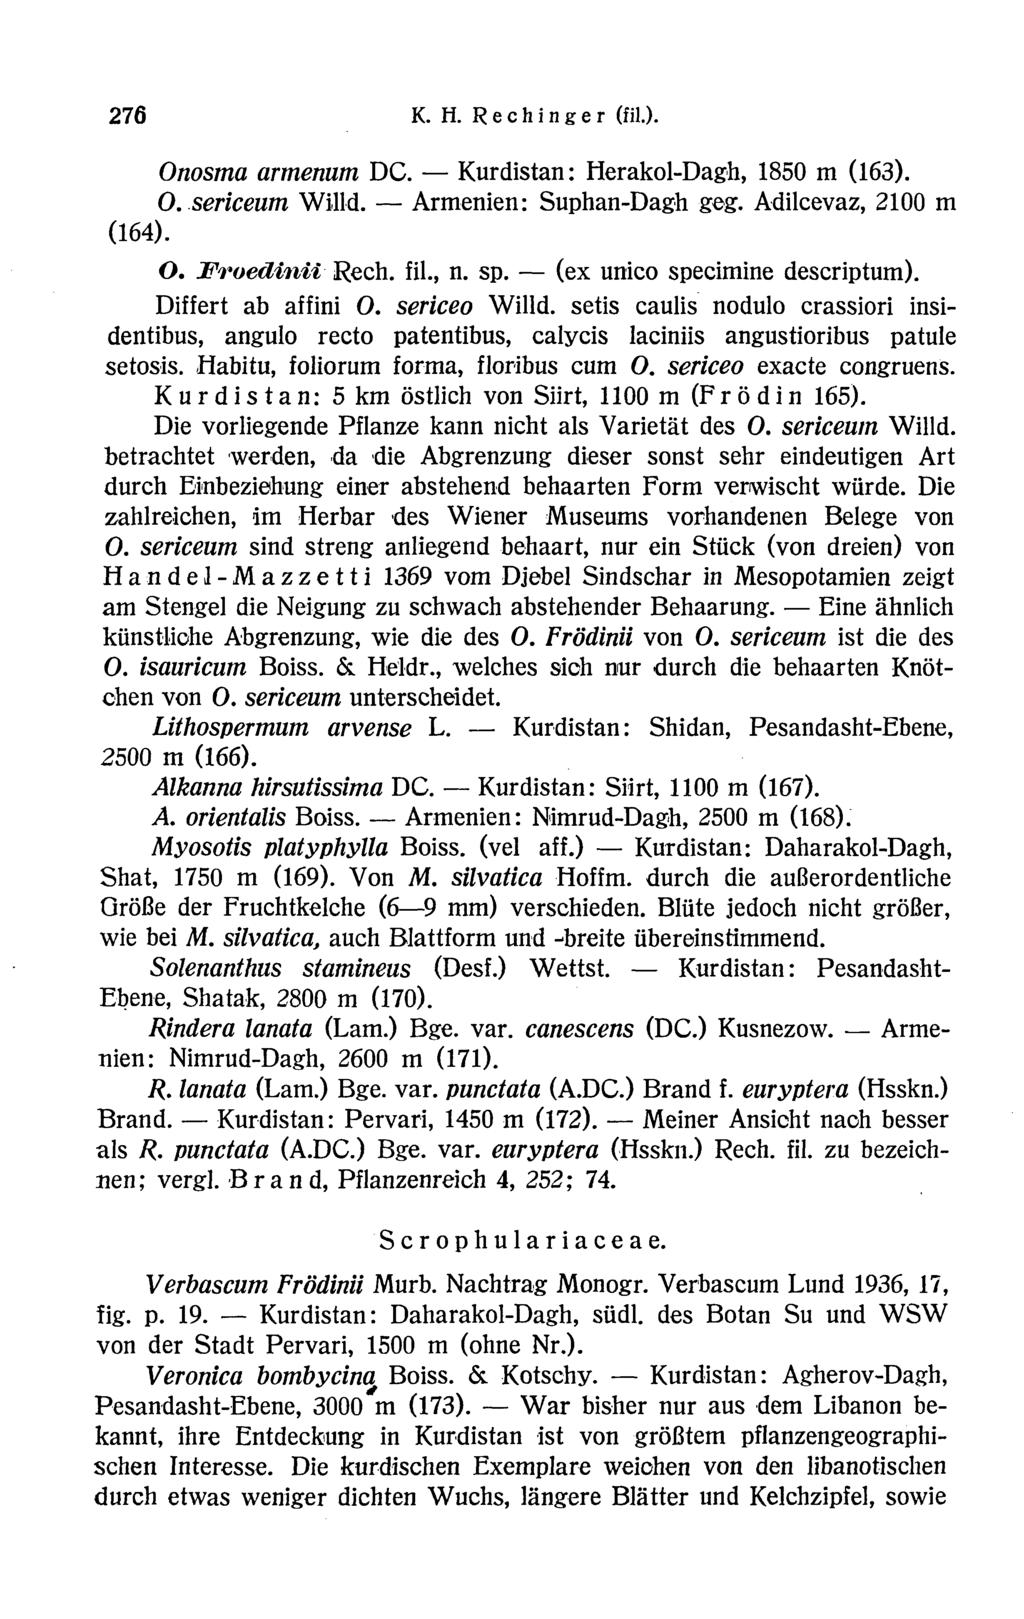 276 K. H. Rechinger (fil.). Onosma armenum DC. Kurdistan: Herakol-Dagh, 1850 m (163). O. sericeum Willd. Armenien: Suphan-Dagh gqg. Adilcevaz, 2100 m (164). O. JTroedinii Rech, fil., n. sp.